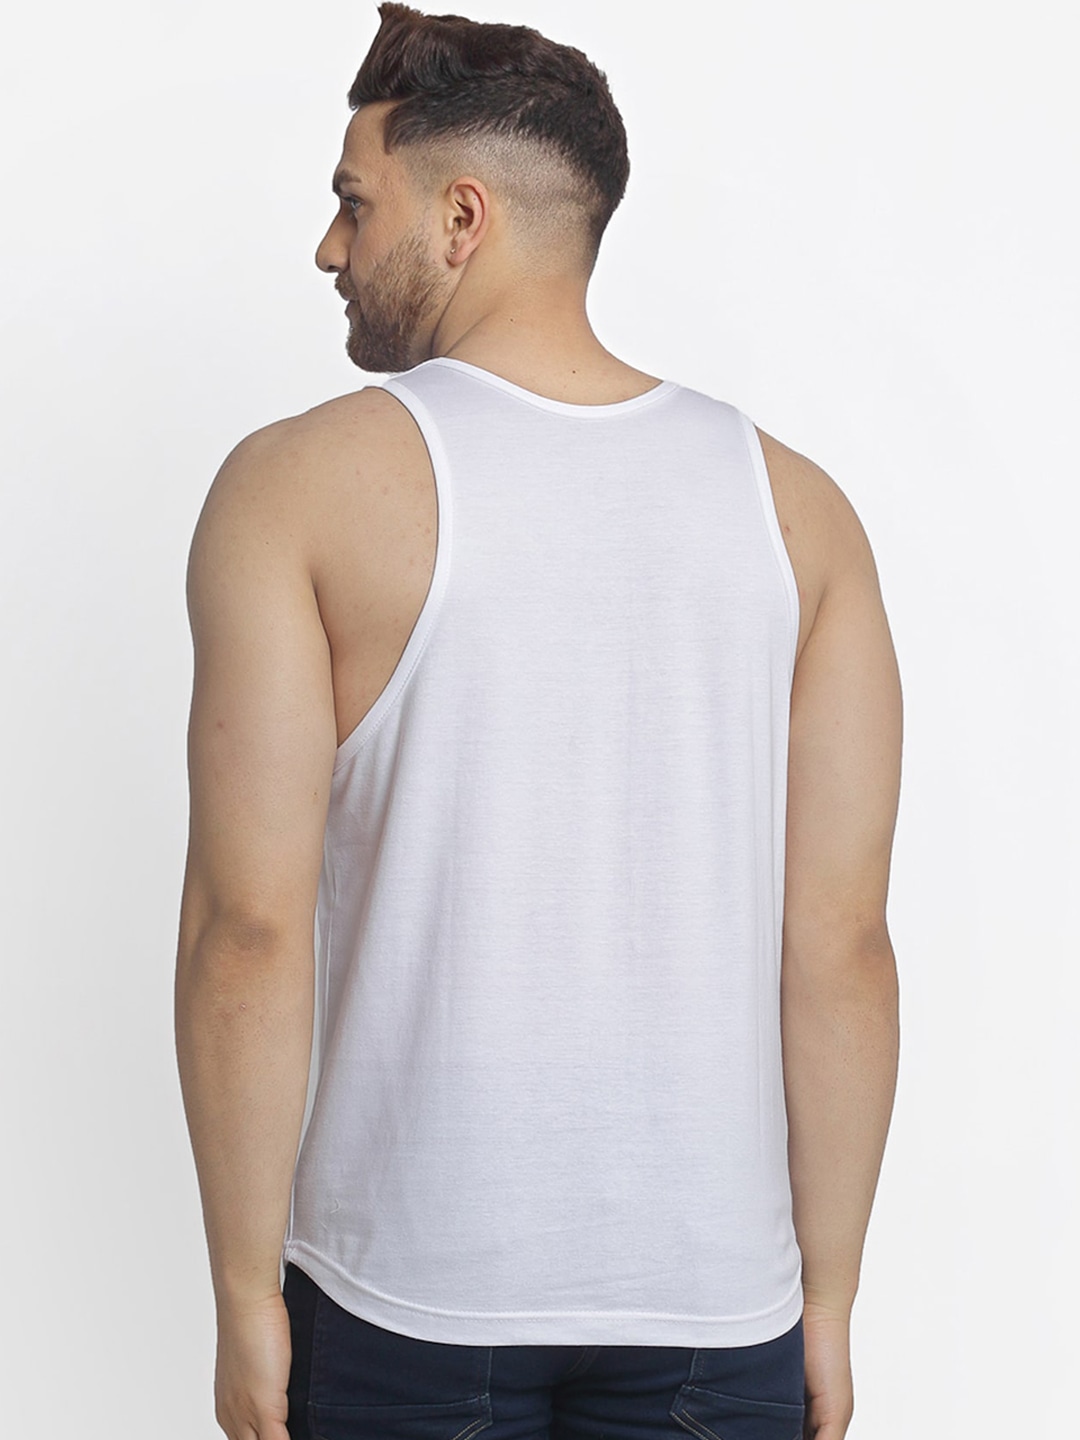 Clothing Innerwear Vests | Friskers Men White & Black Printed Cotton Apple Cut Gym Vest - WS99174